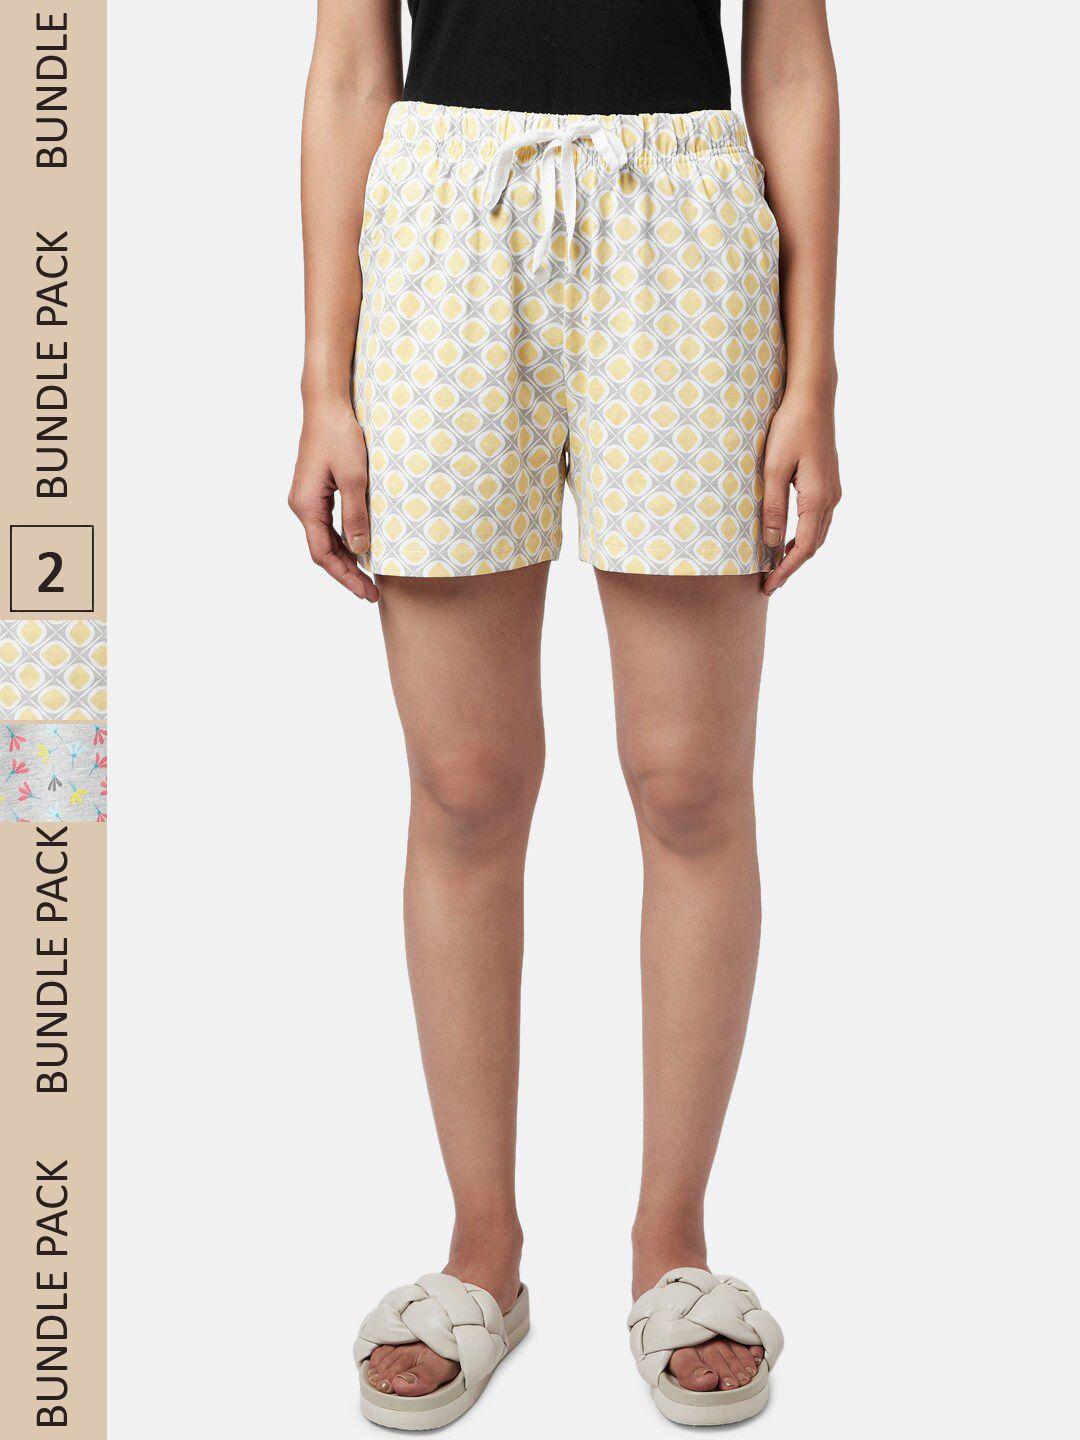 yu by pantaloons women grey & yellow pack of 2 printed lounge shorts